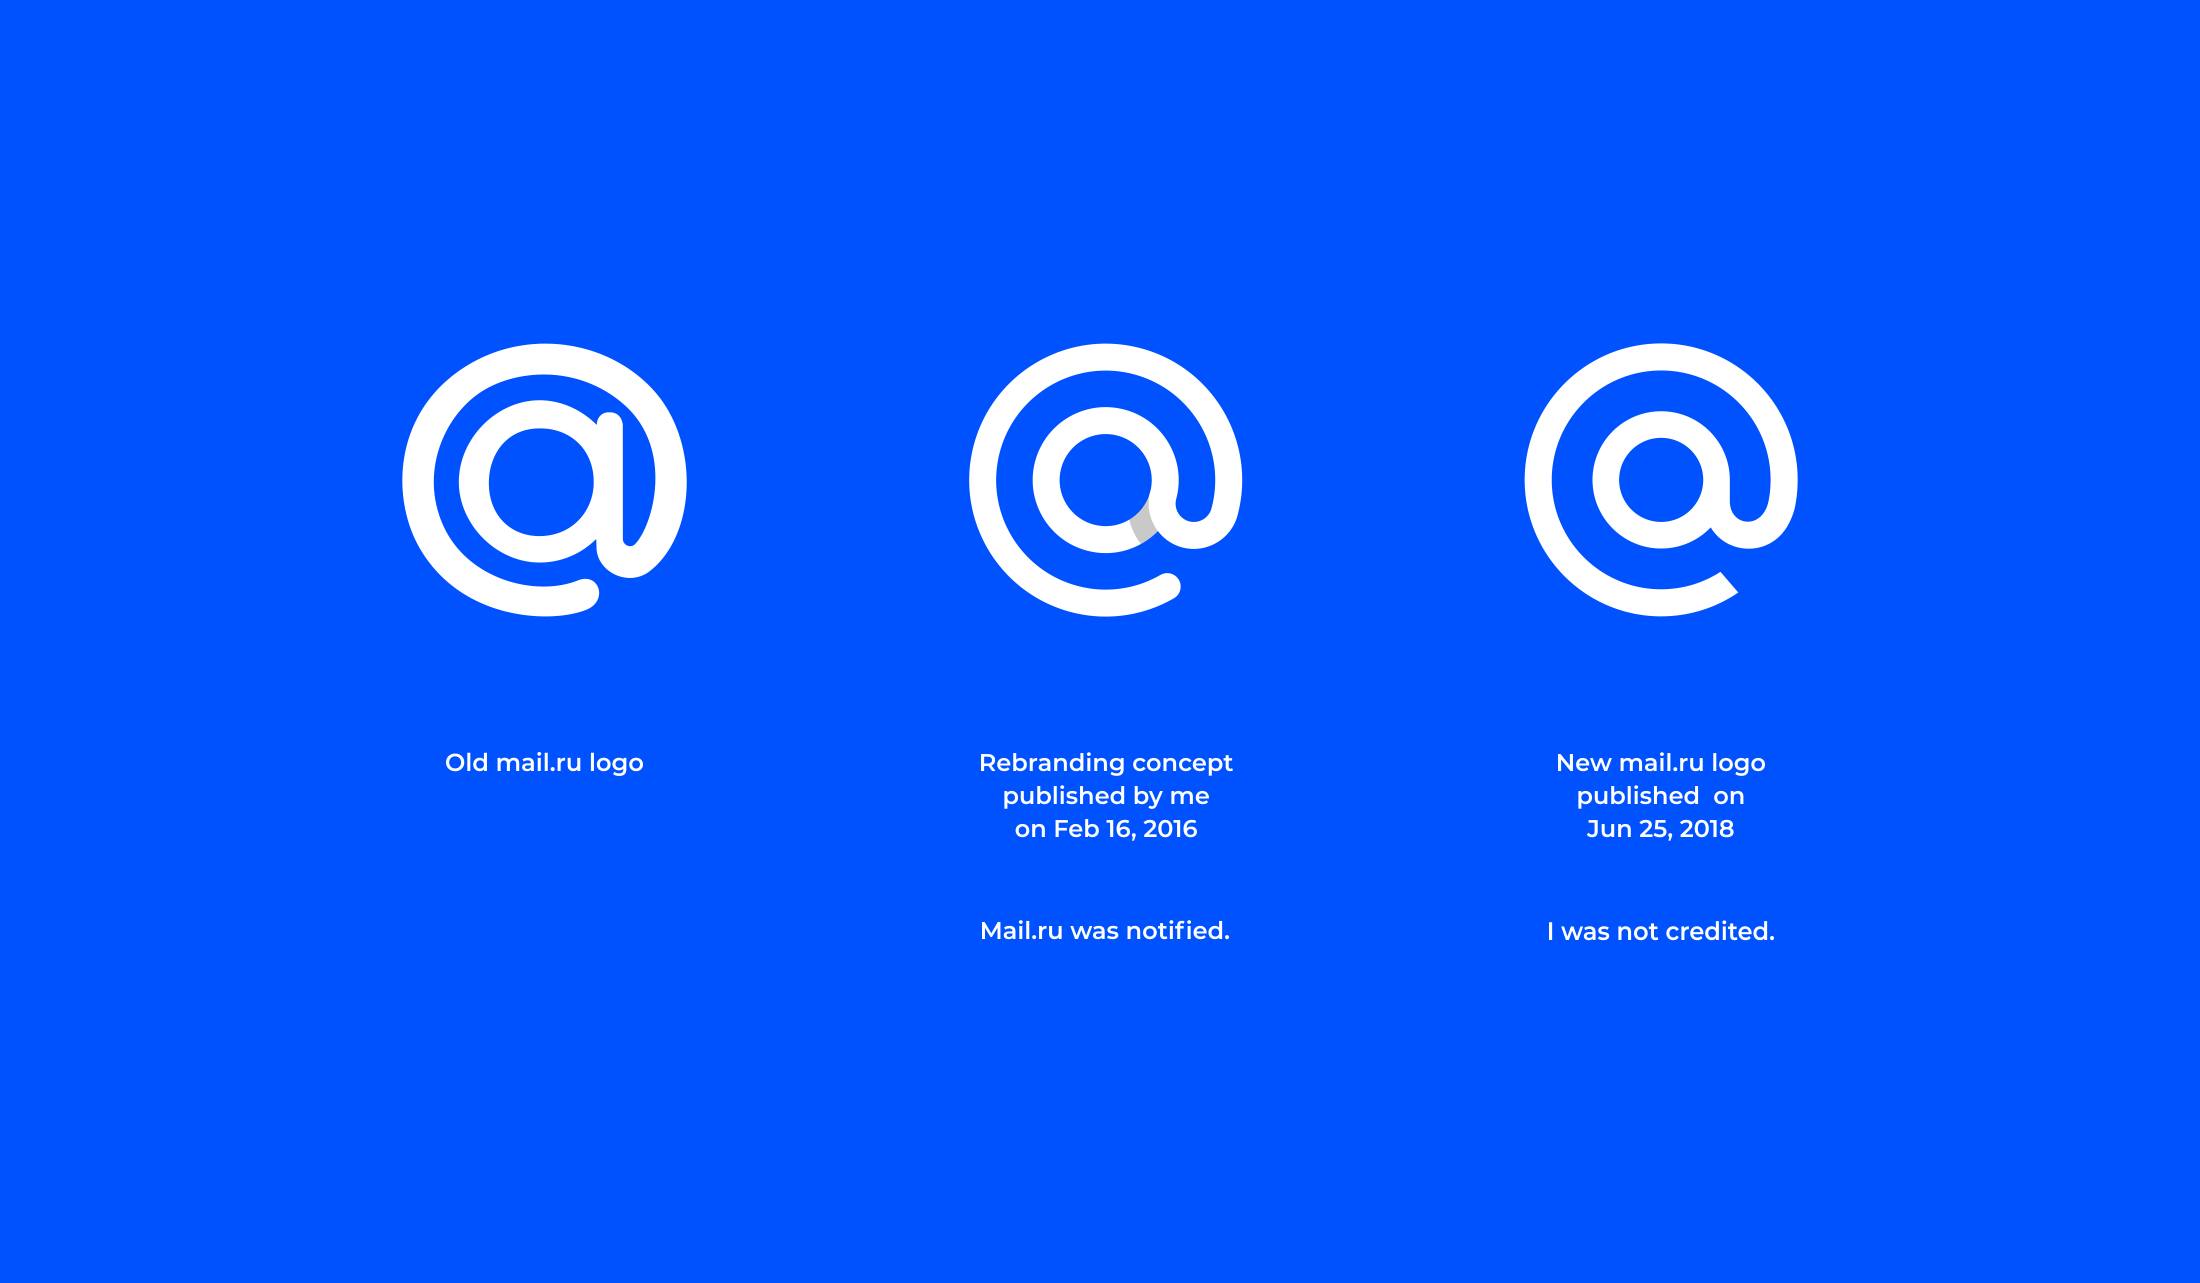 Mail.ru Logo - Should mail.ru give credit for my work? : logodesign